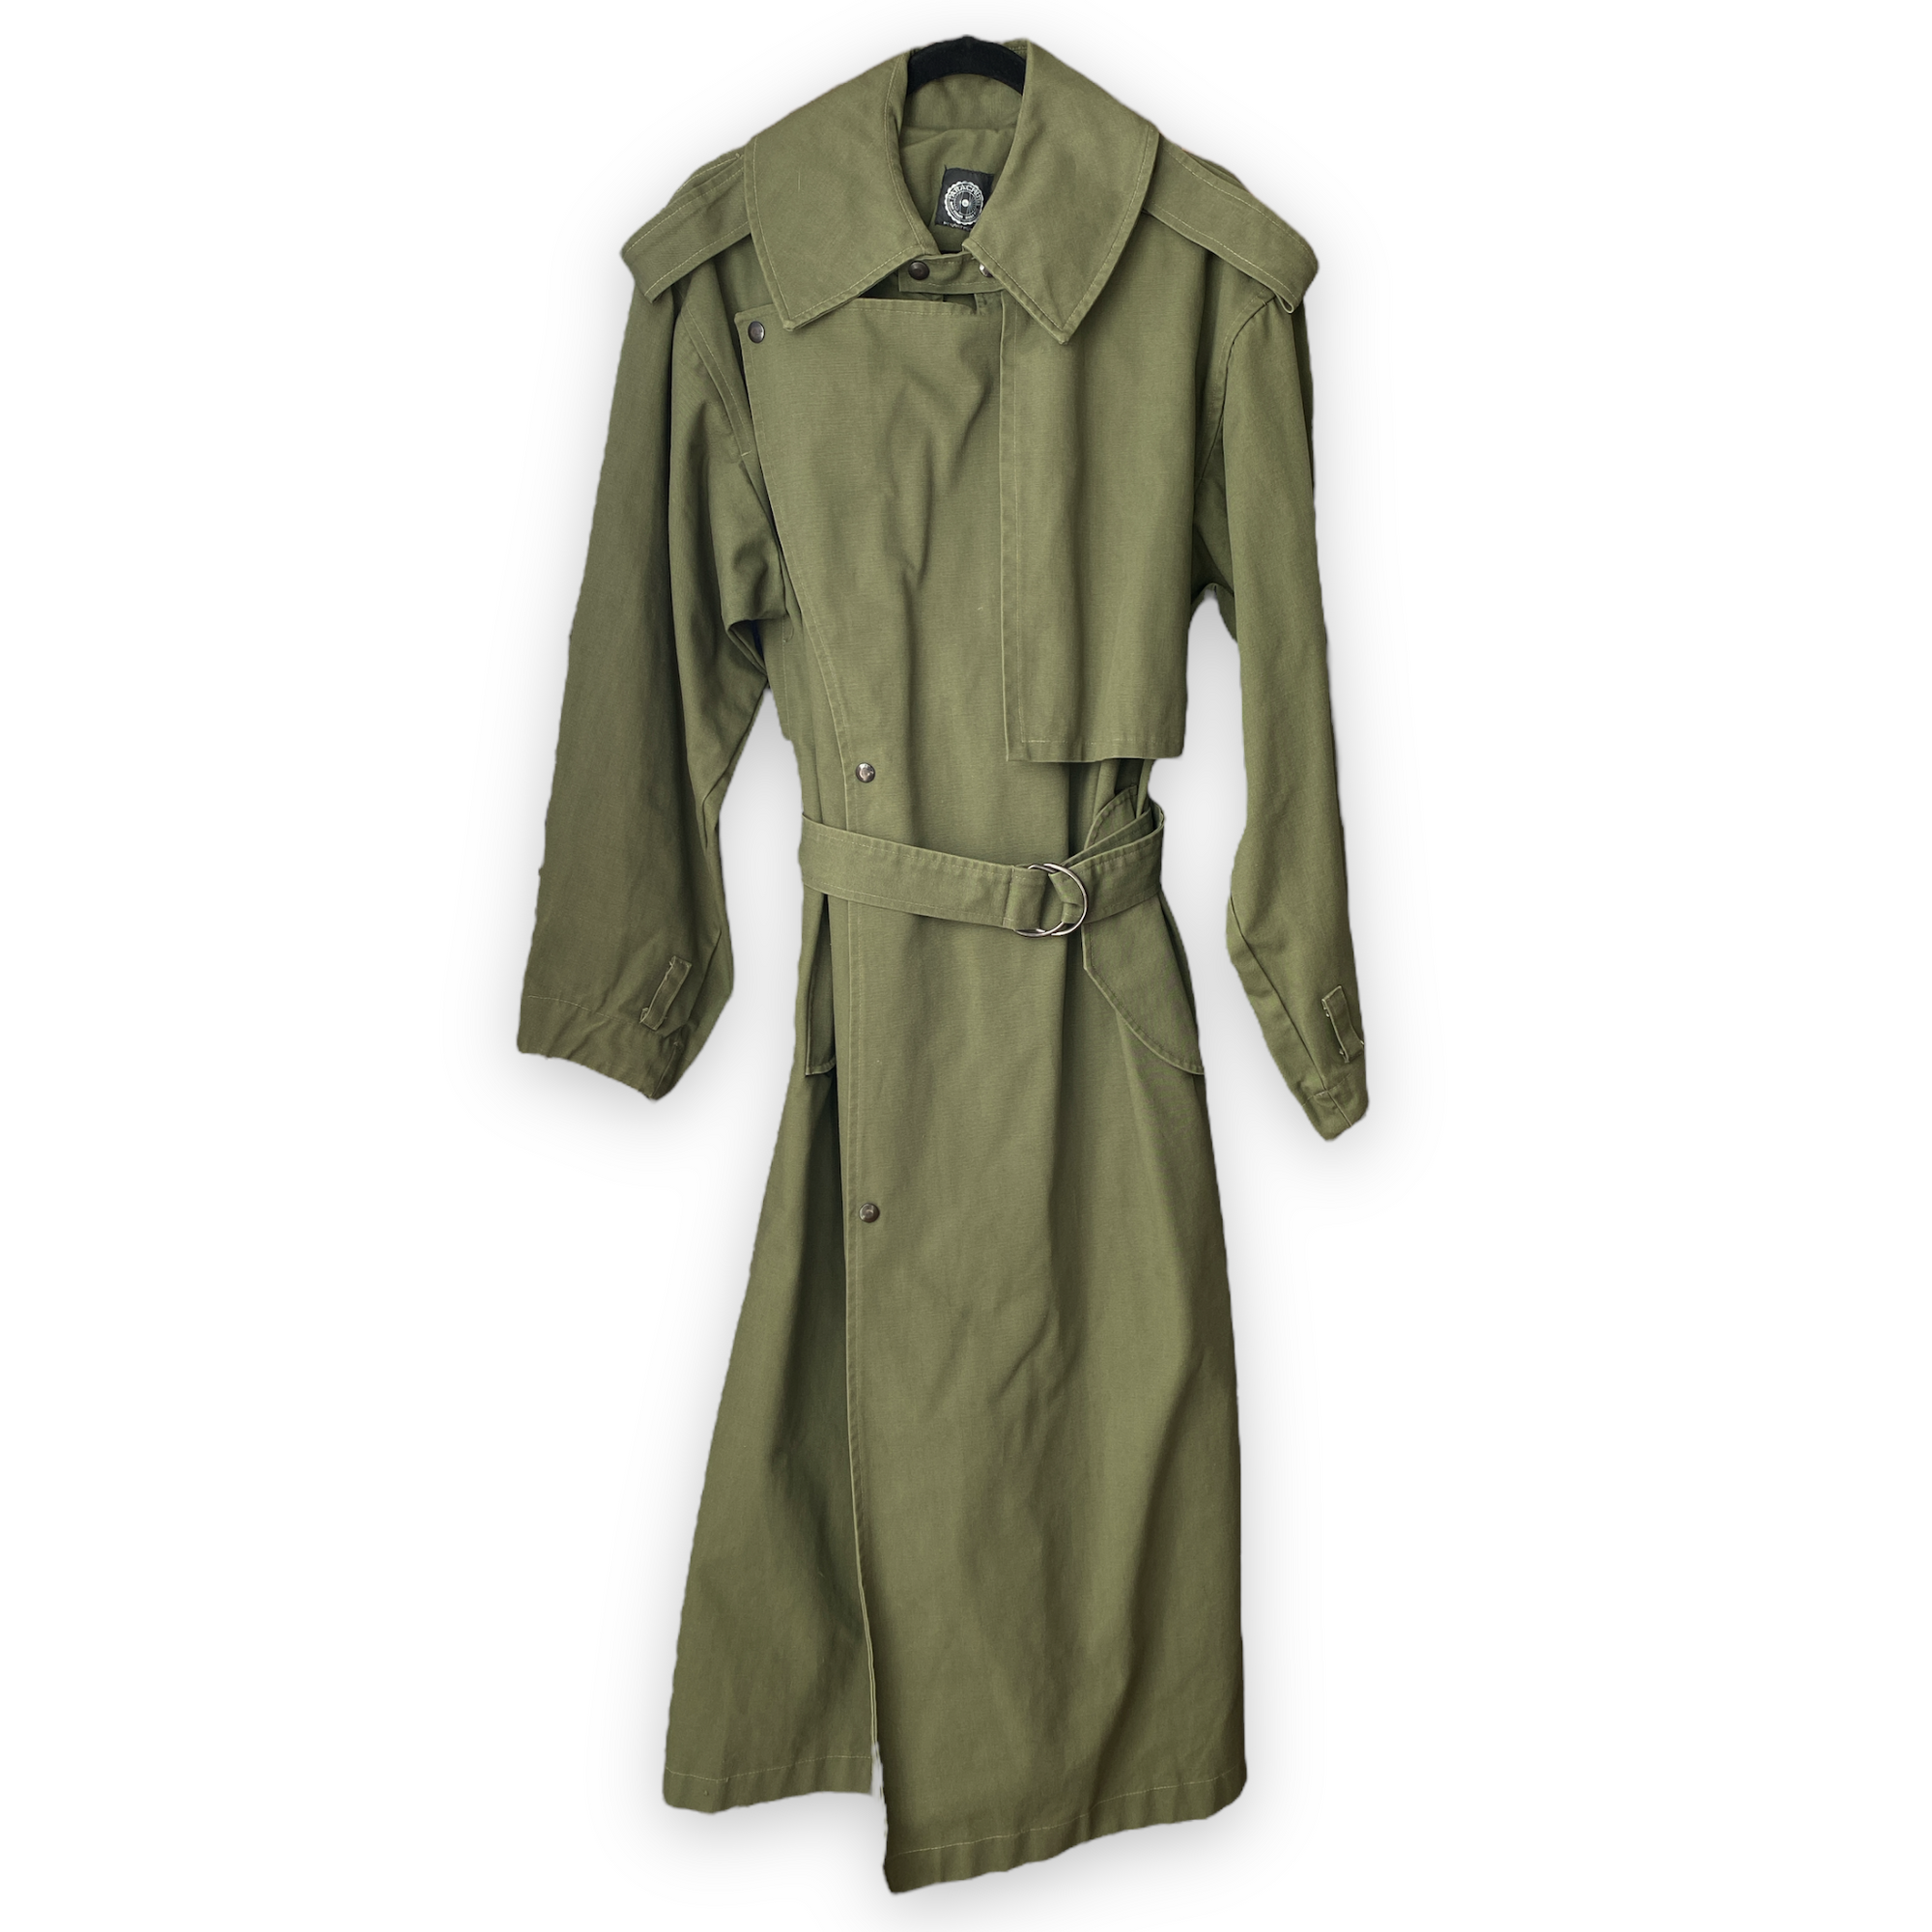 Parachute Green Trench Coat